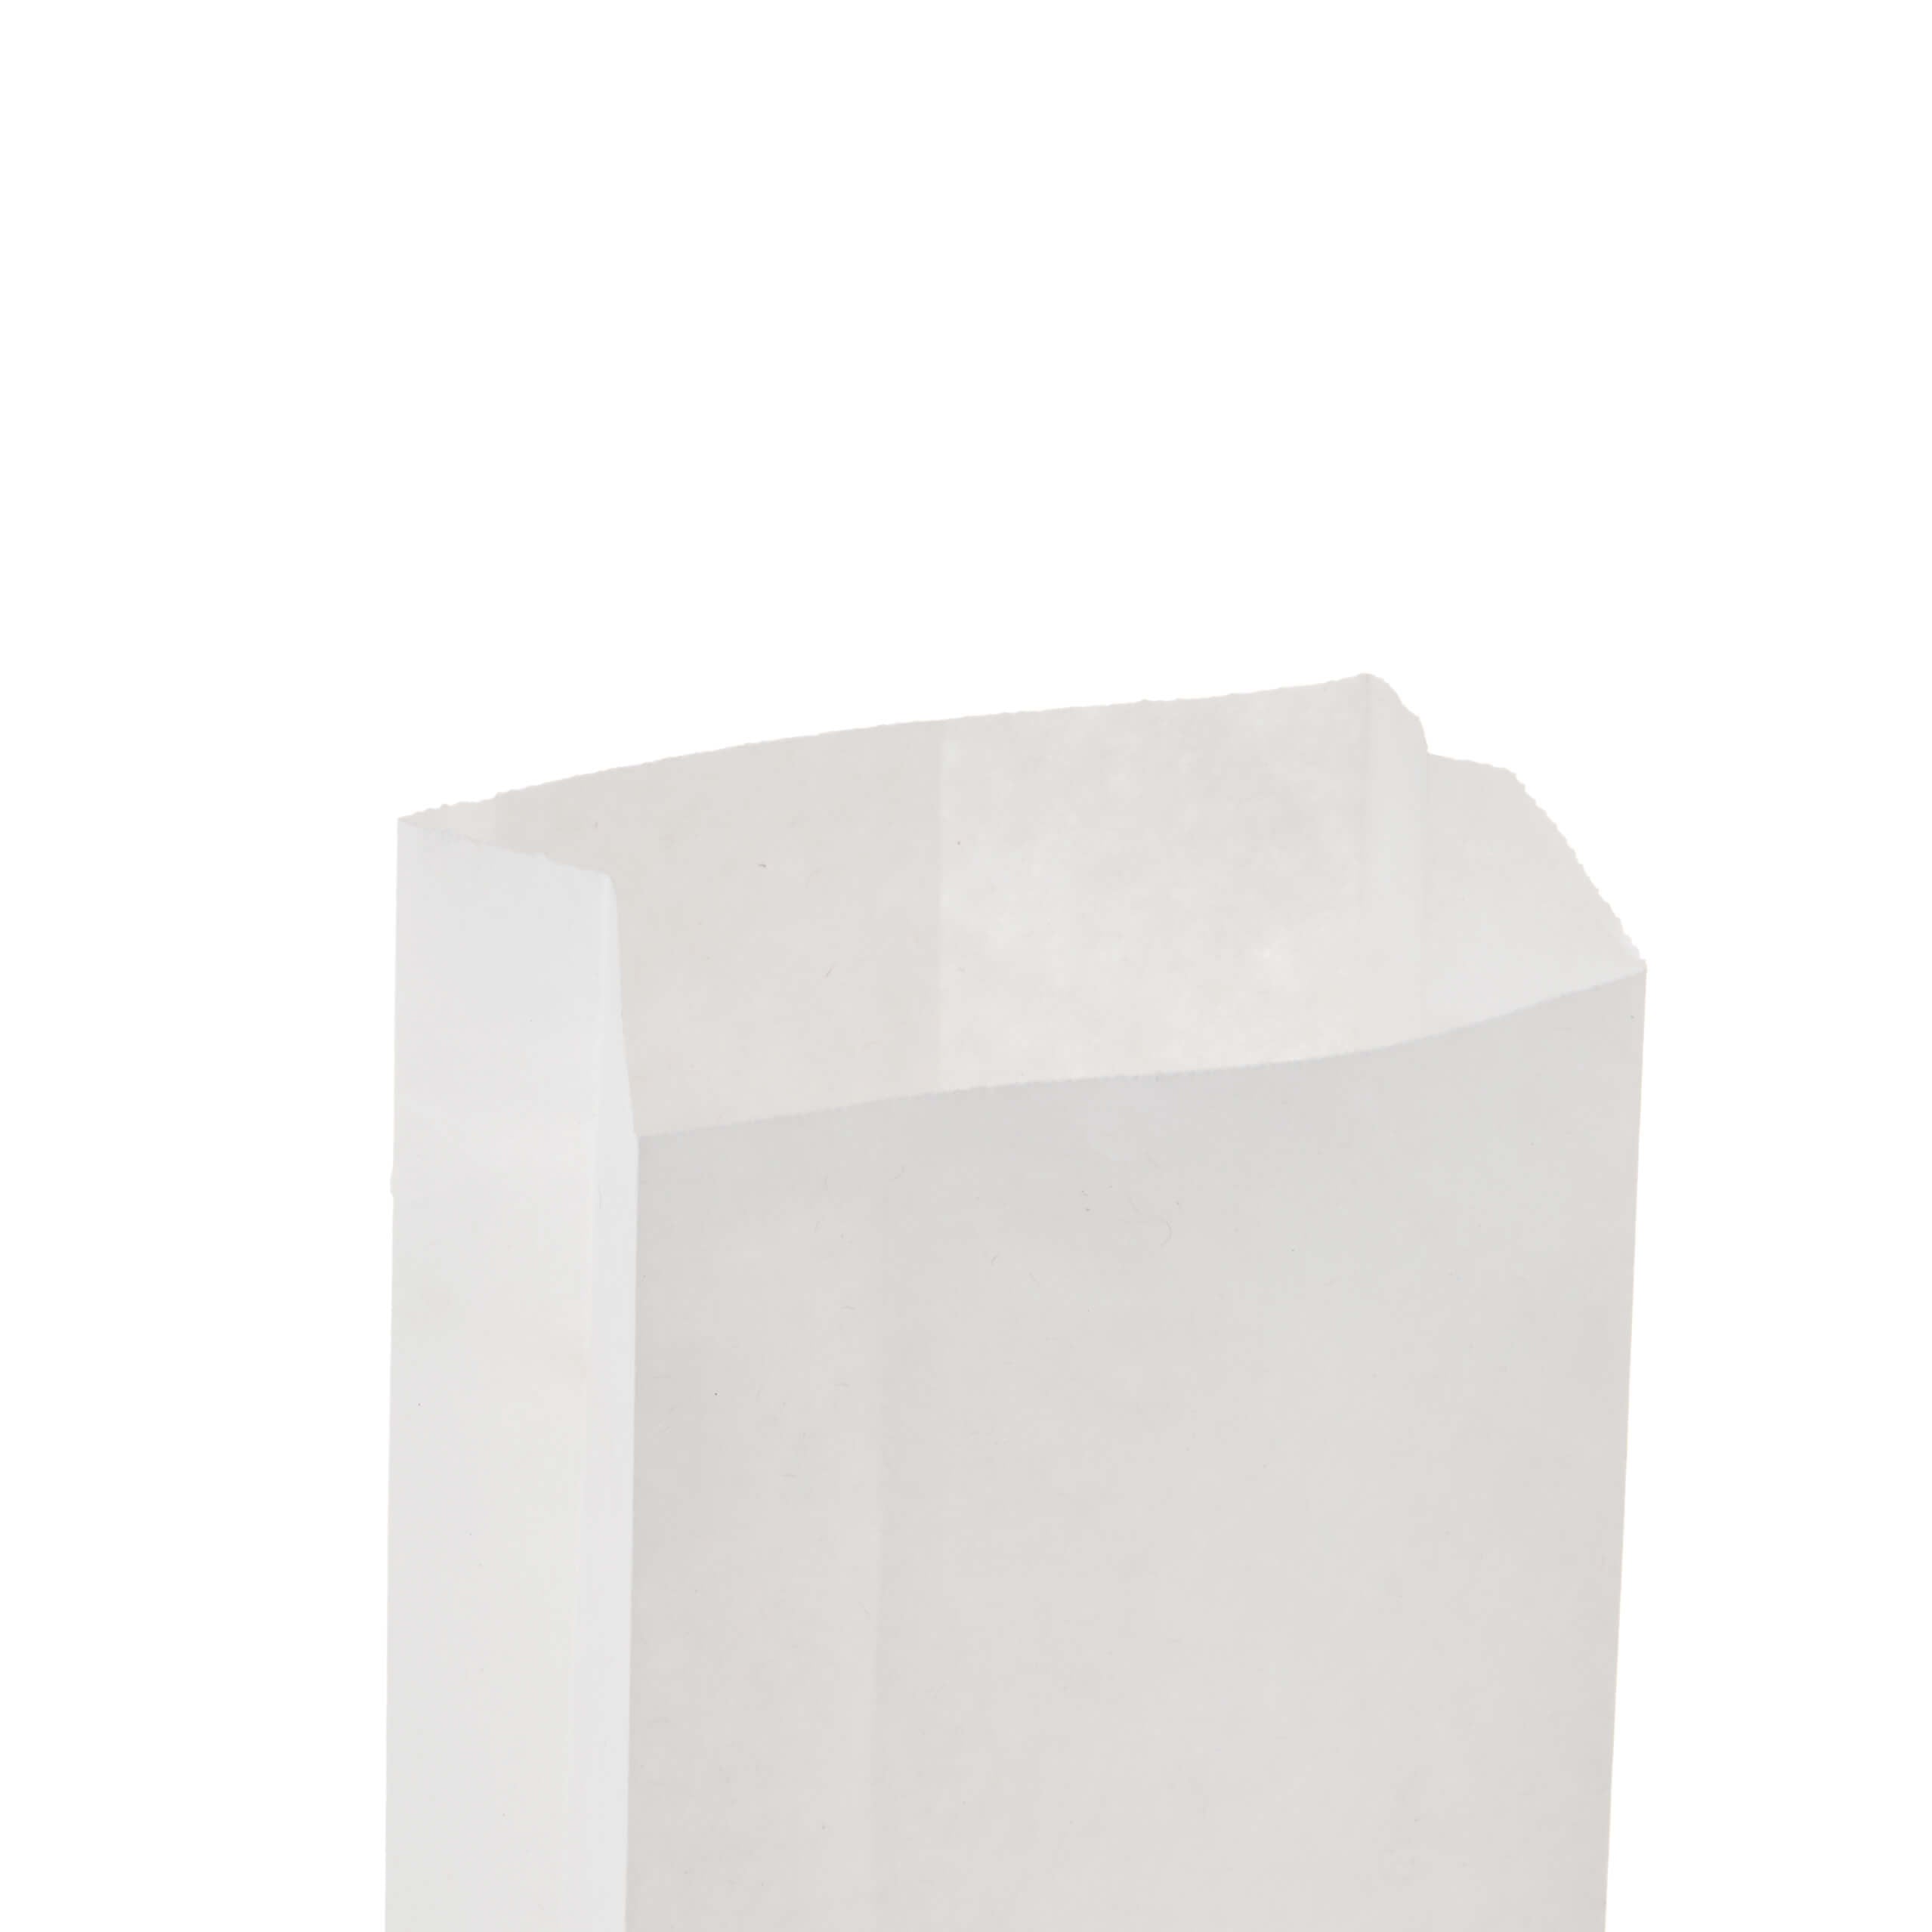 Eco friendly paper bag white - Hotpack Global